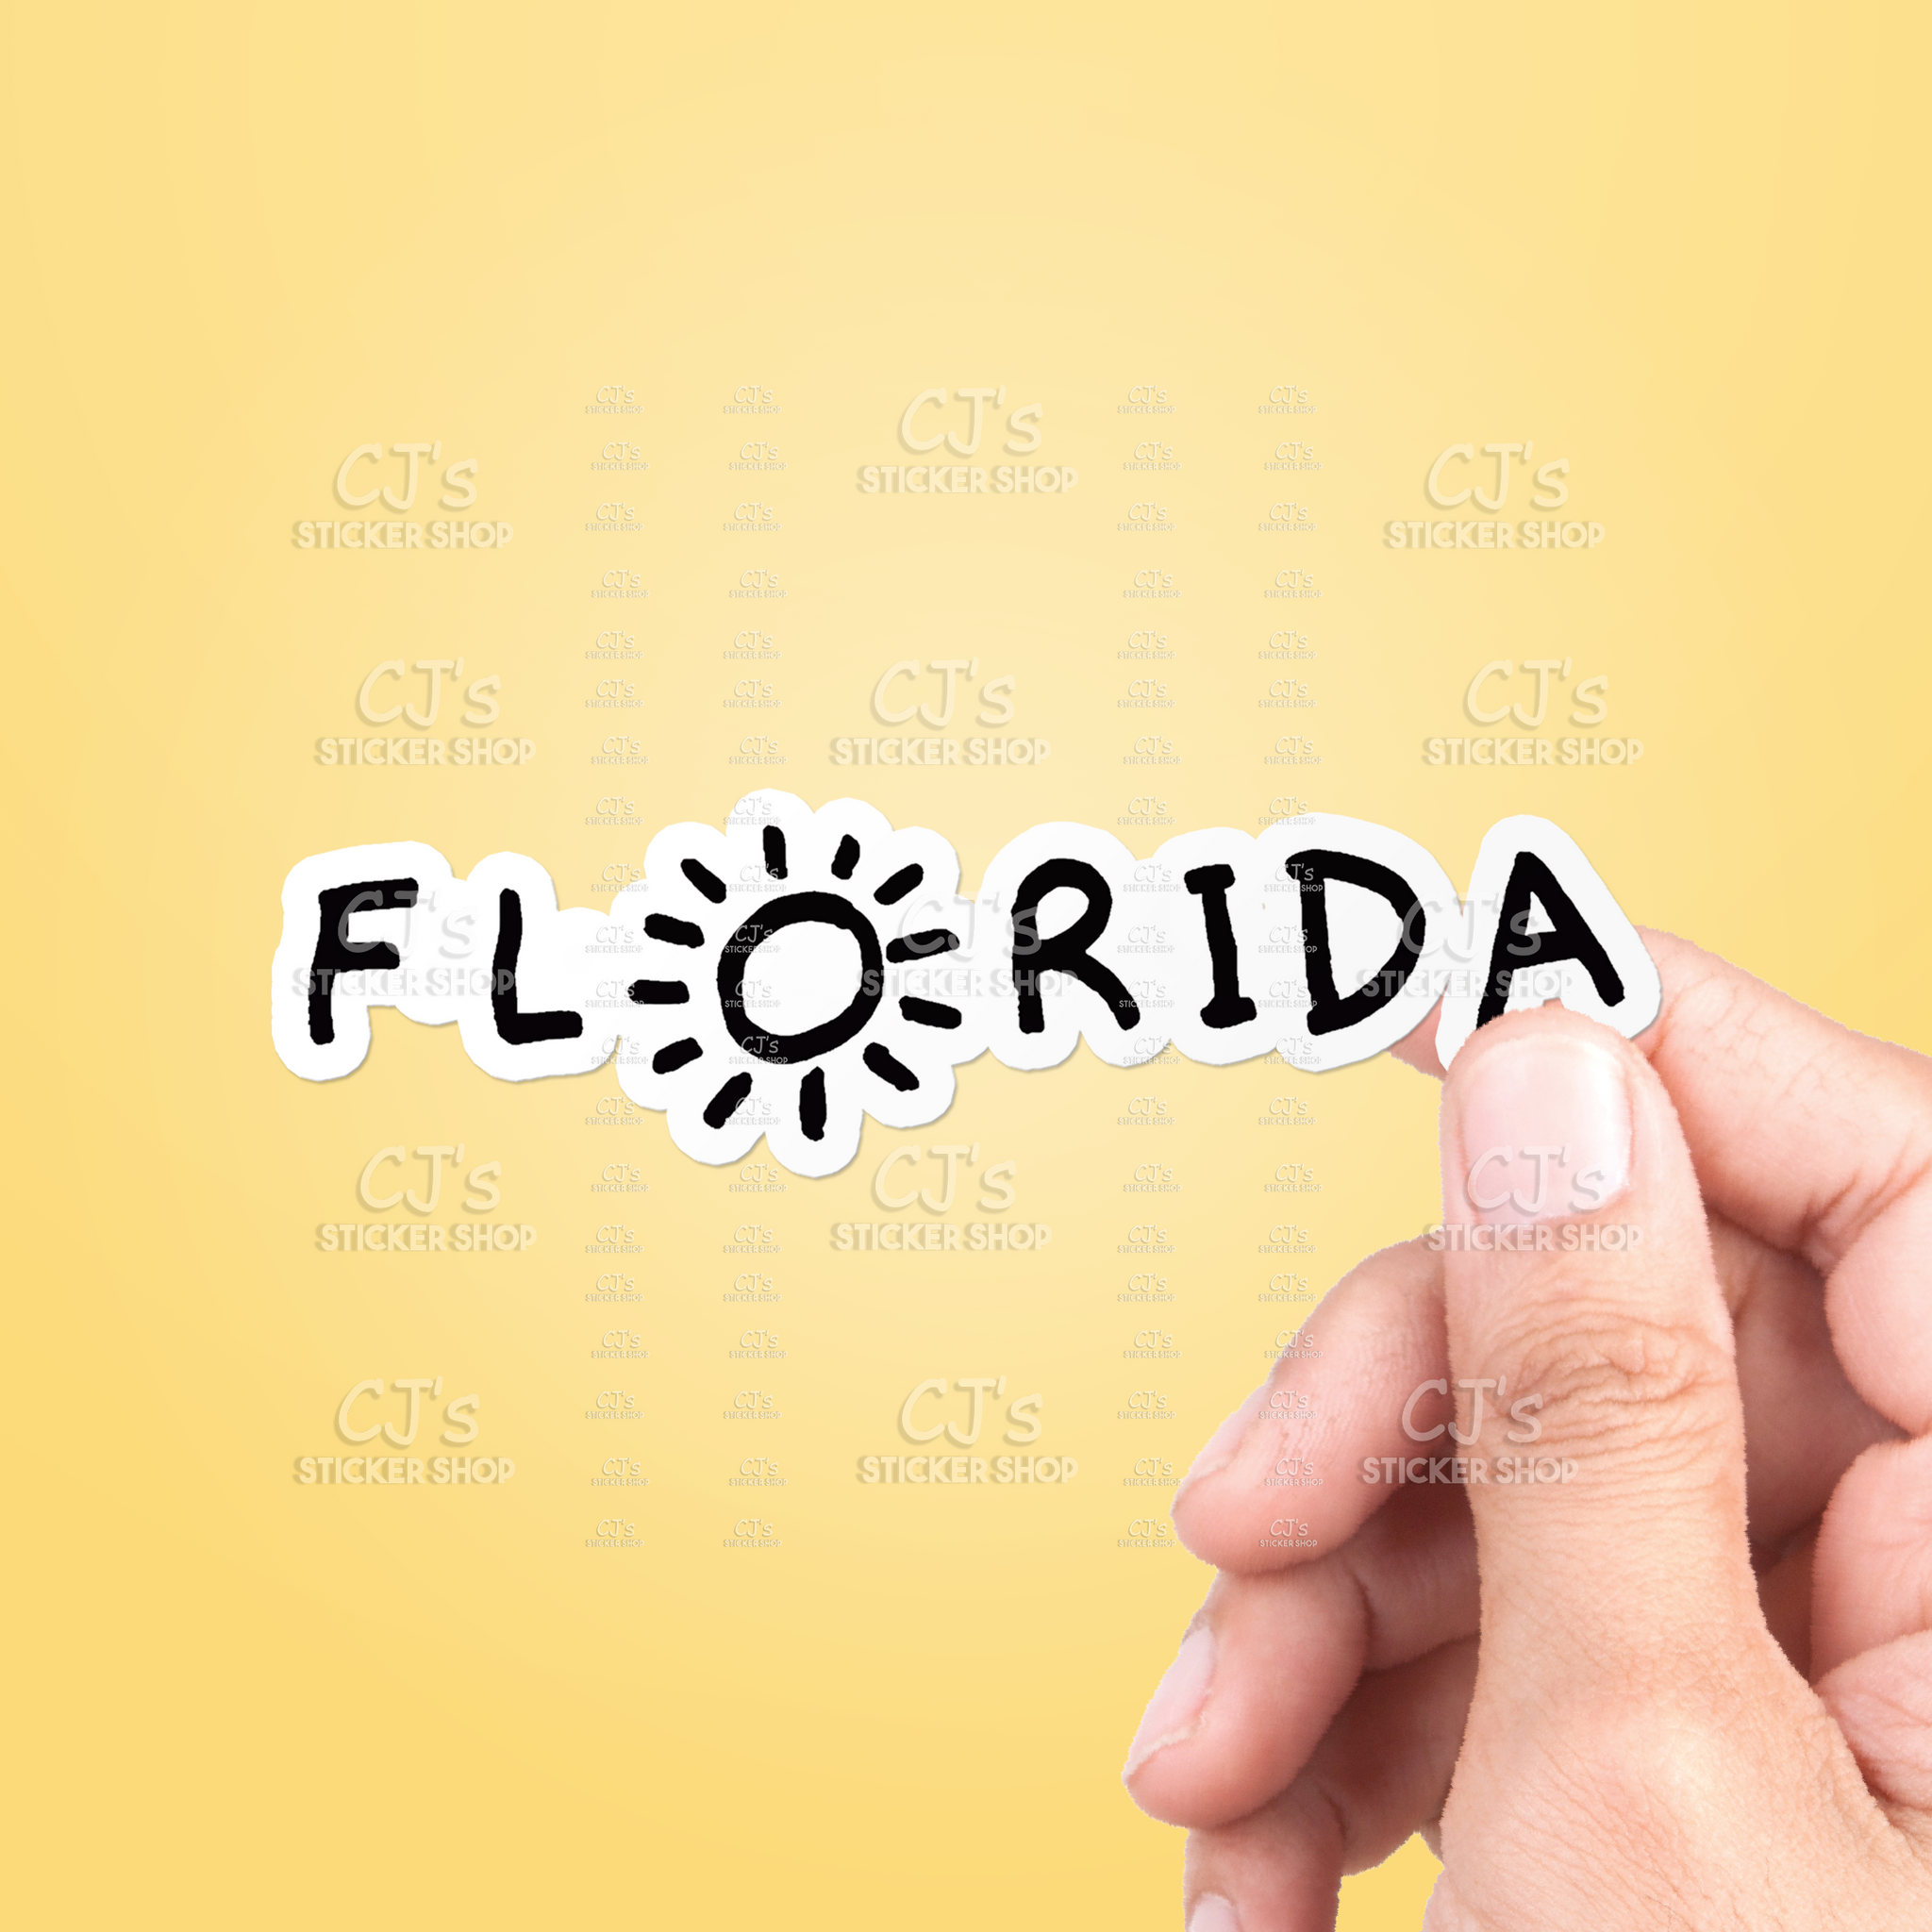 Florida Sun Sticker